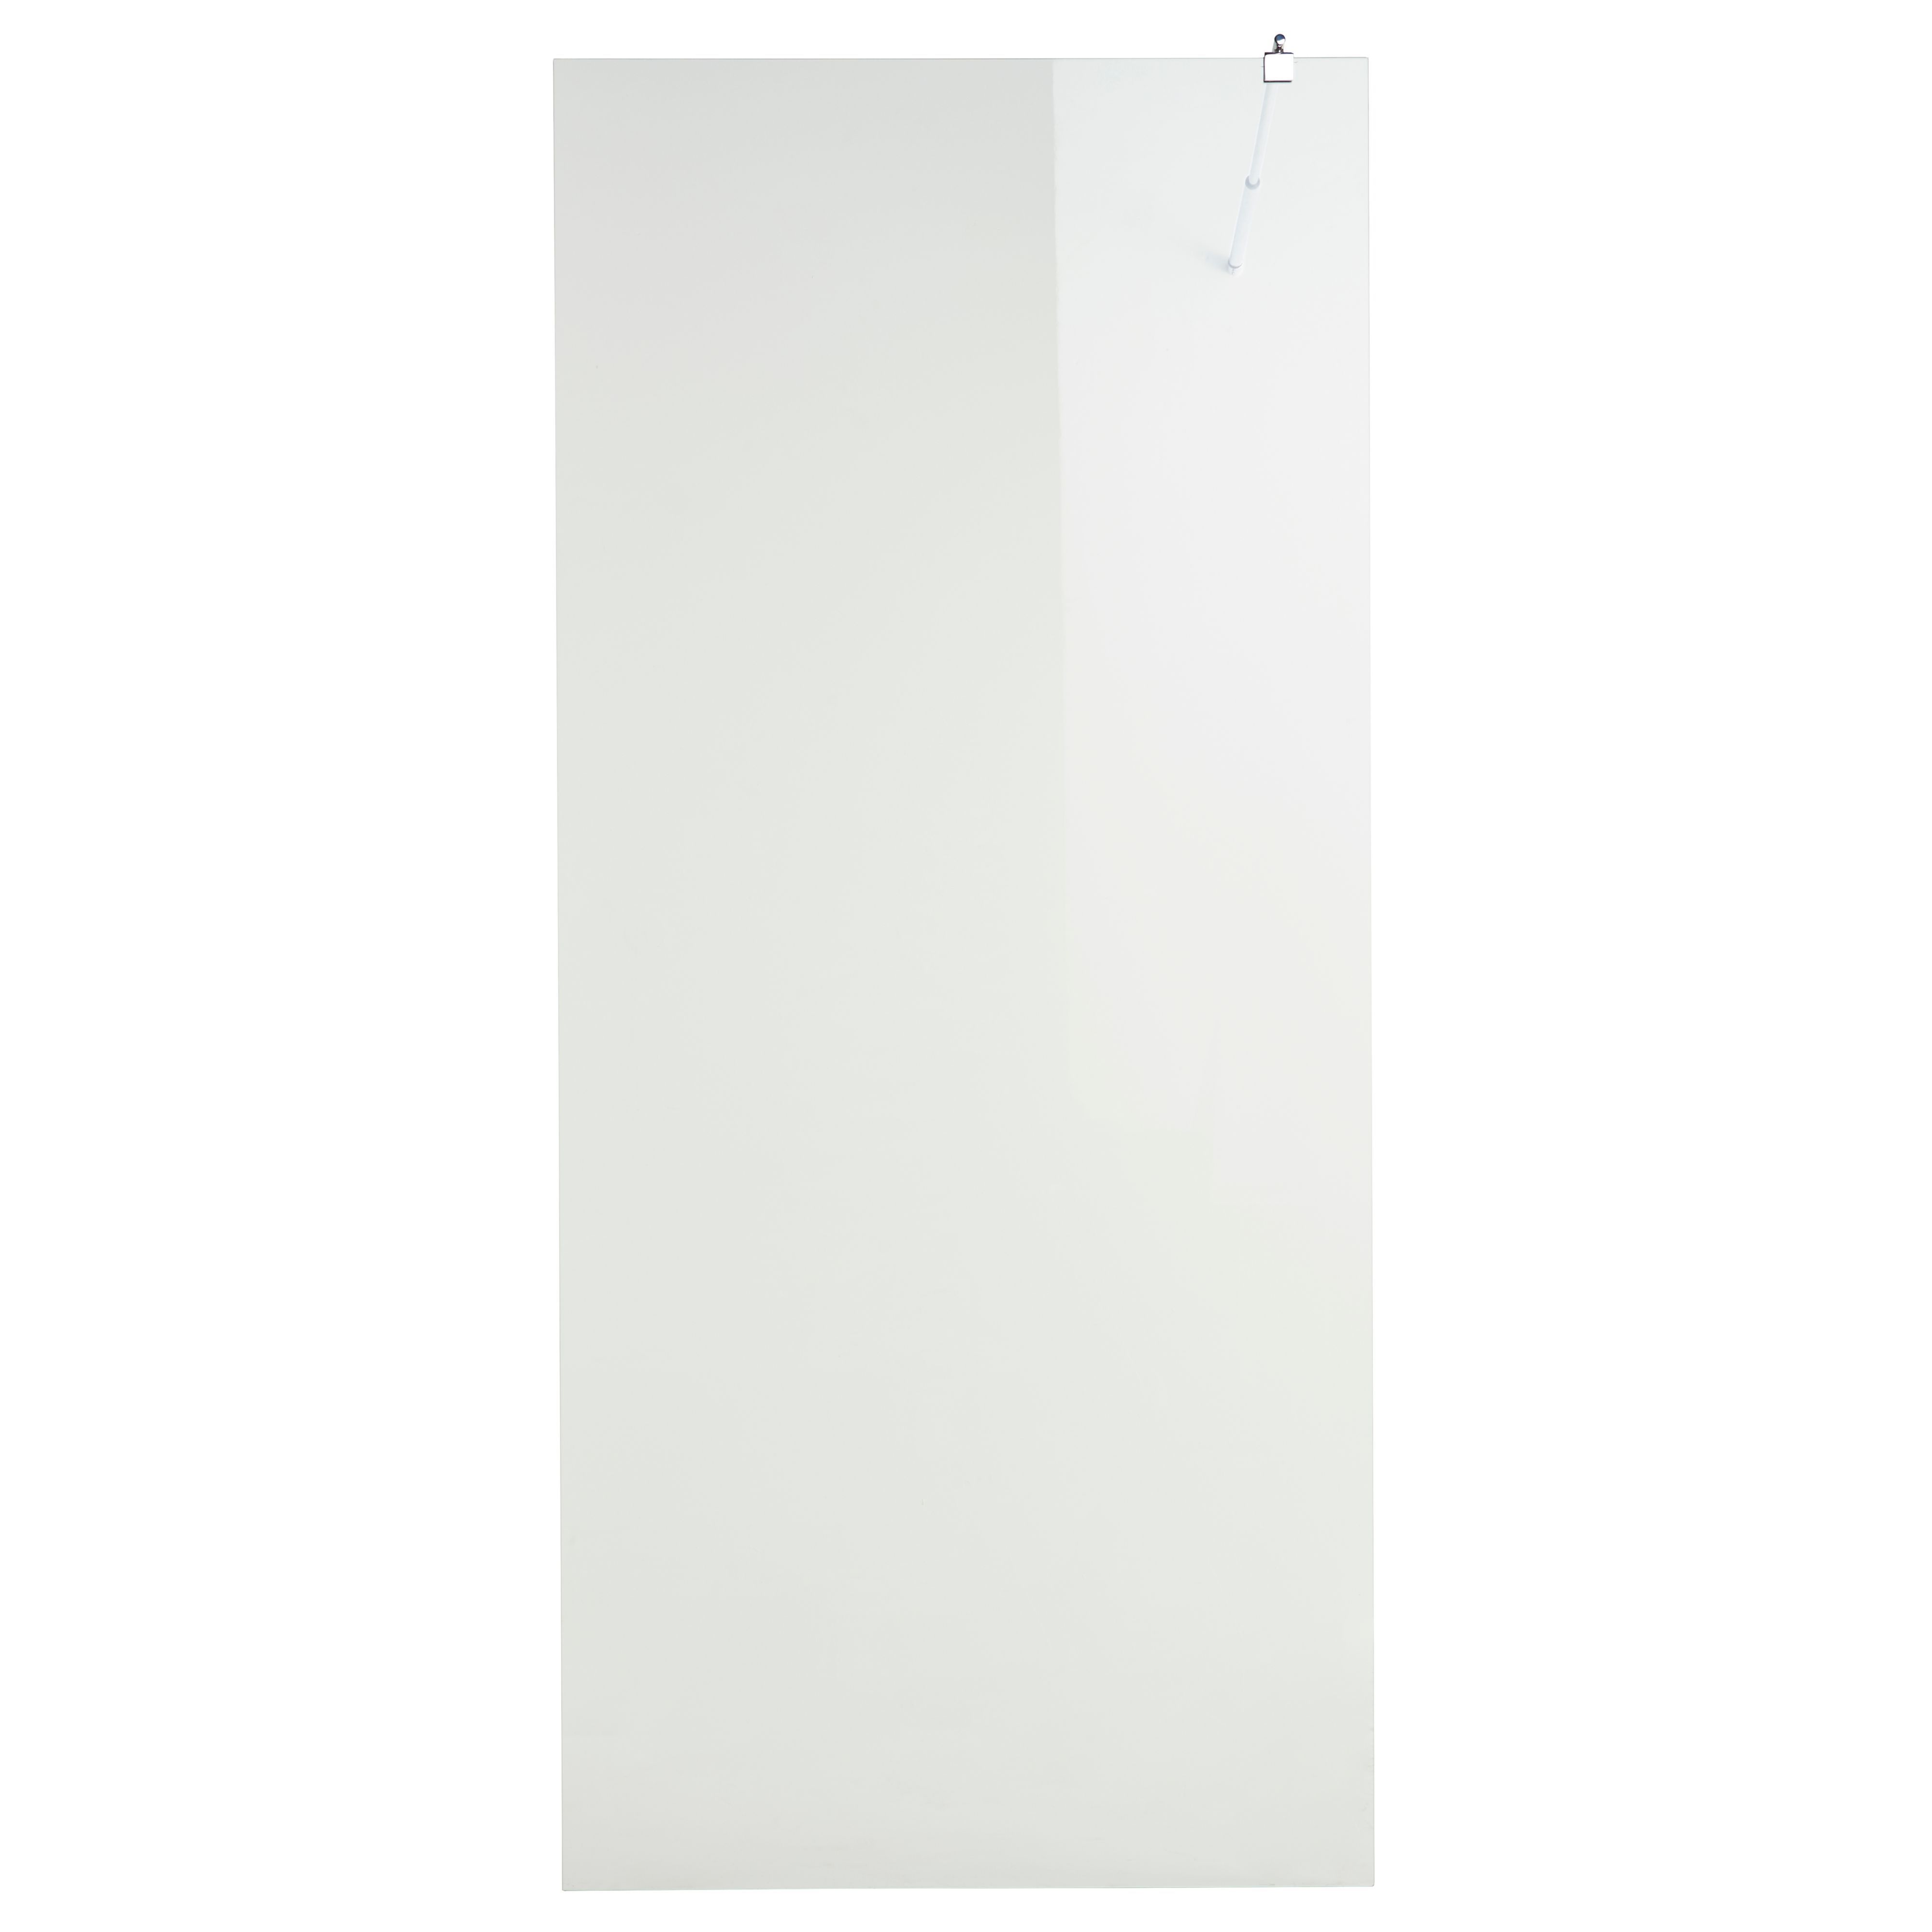 Cooke & Lewis Onega Chrome effect Clear Walk-in Wet room glass screen (H)195cm (W)120cm